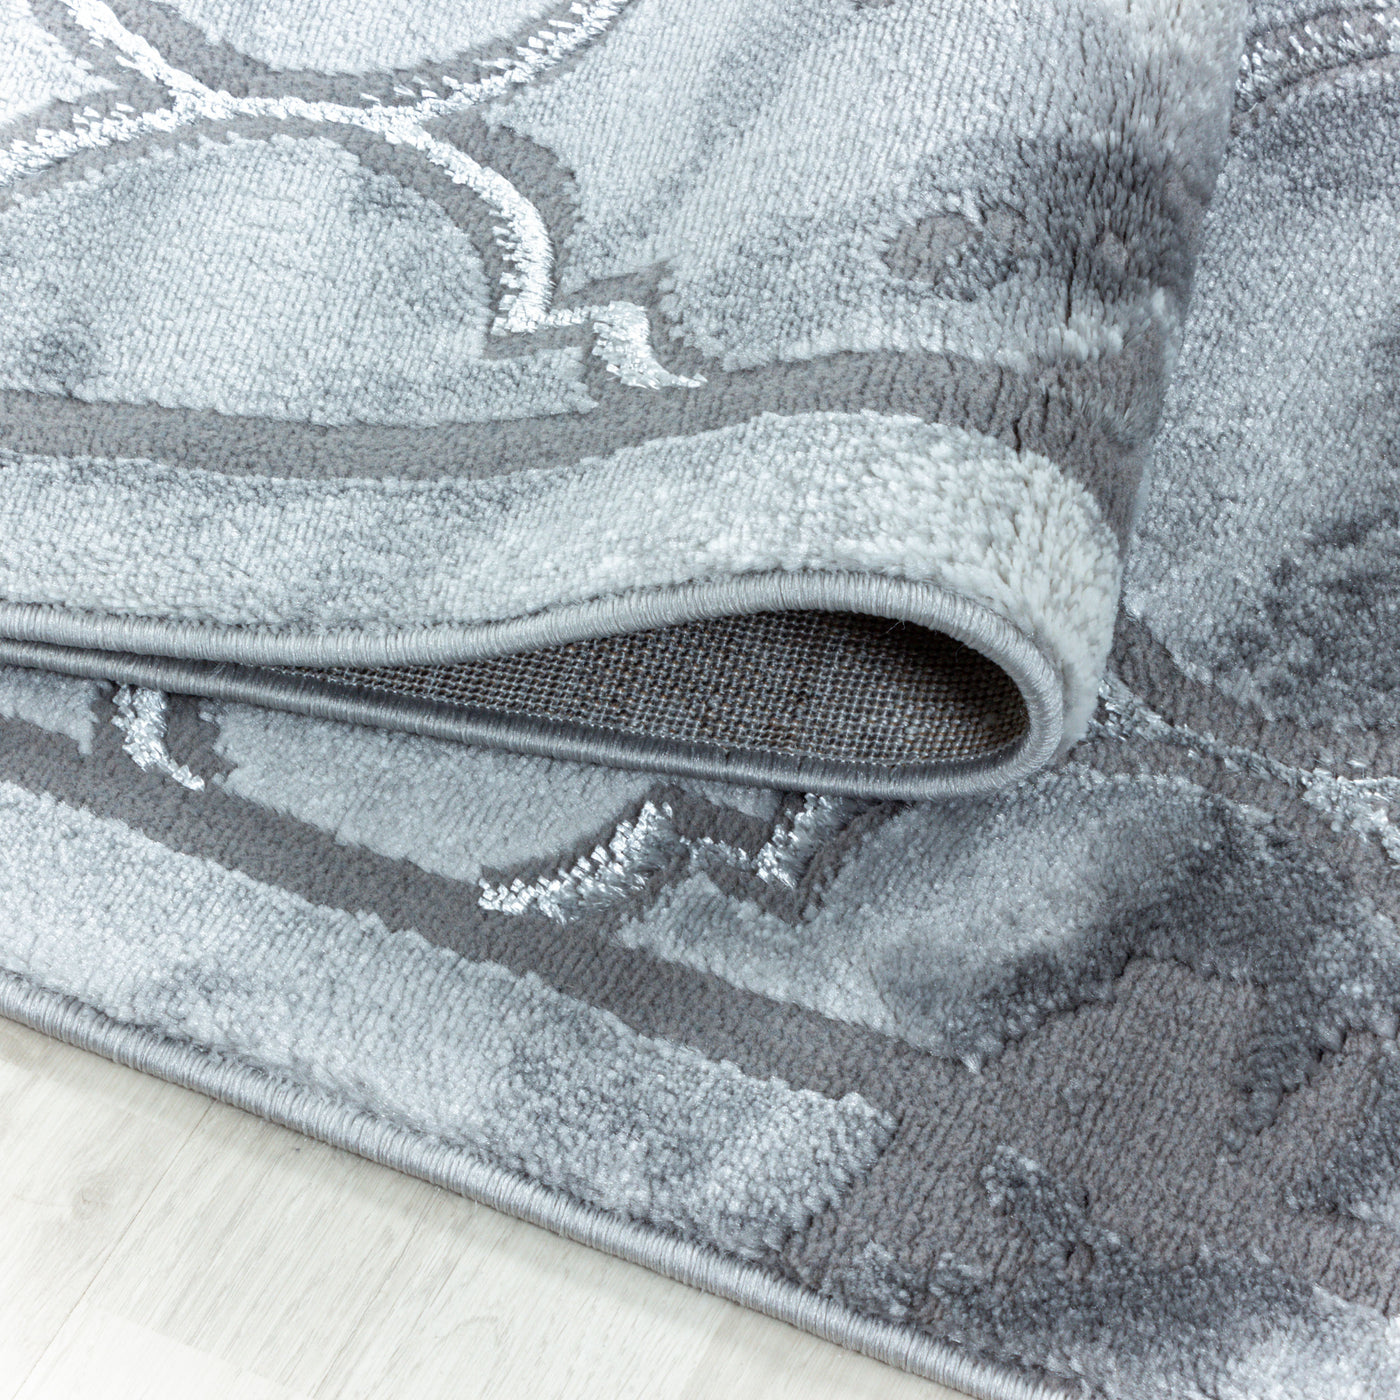 Kurzflor Teppich JUNA Wohnzimmer Marmoriert Soft Touch 3D-Effekt